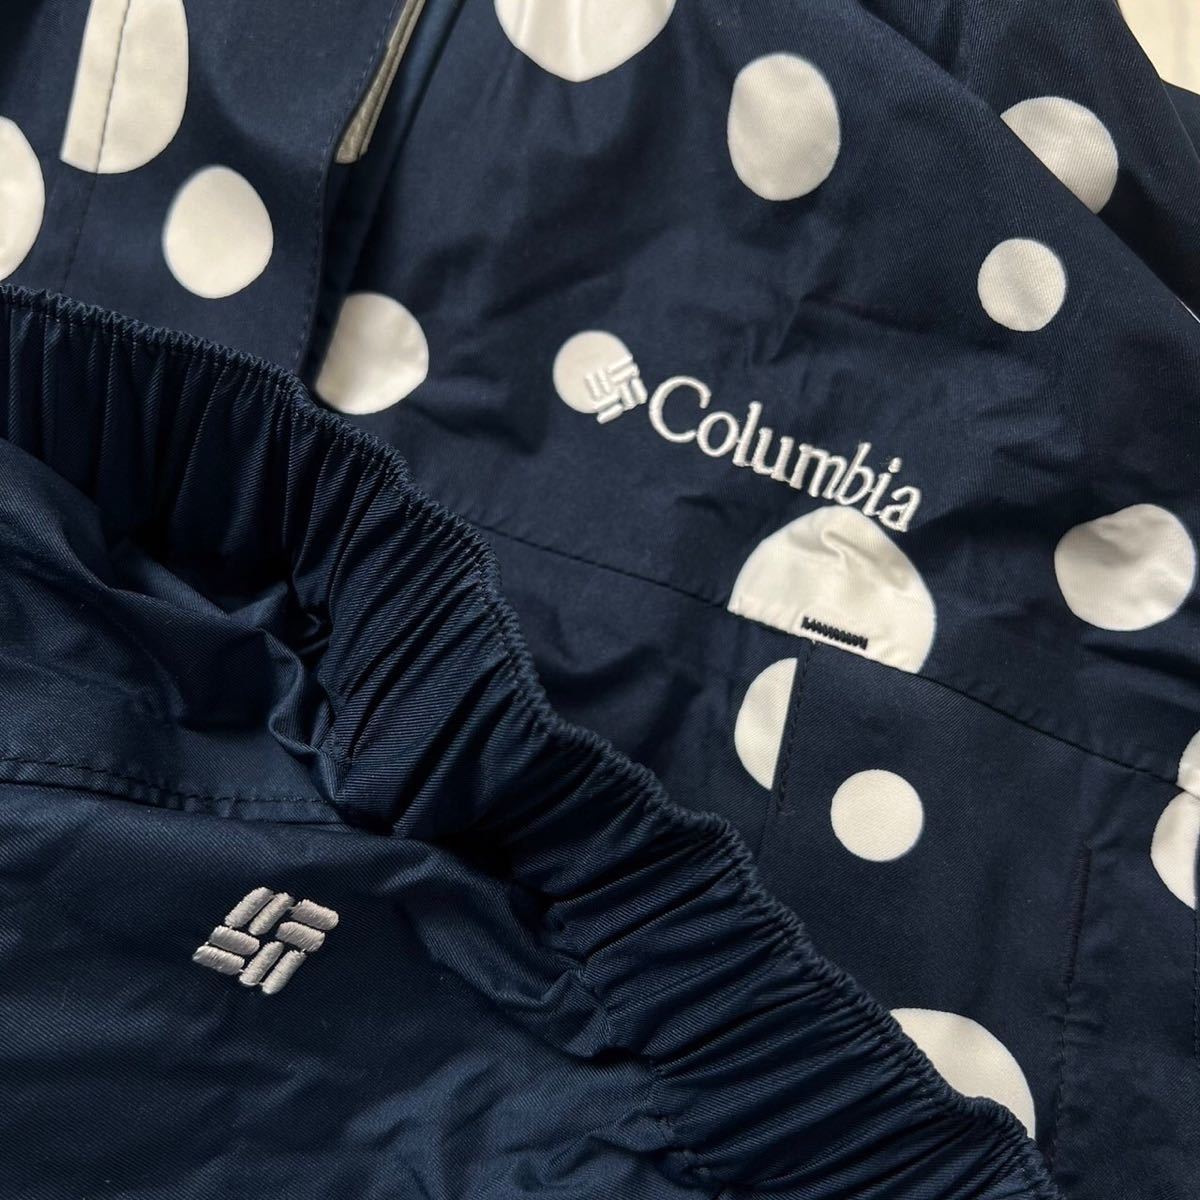  Colombia rainwear setup storage sack attaching Parker pants S waist rubber dot pattern navy blue navy Columbia lady's 